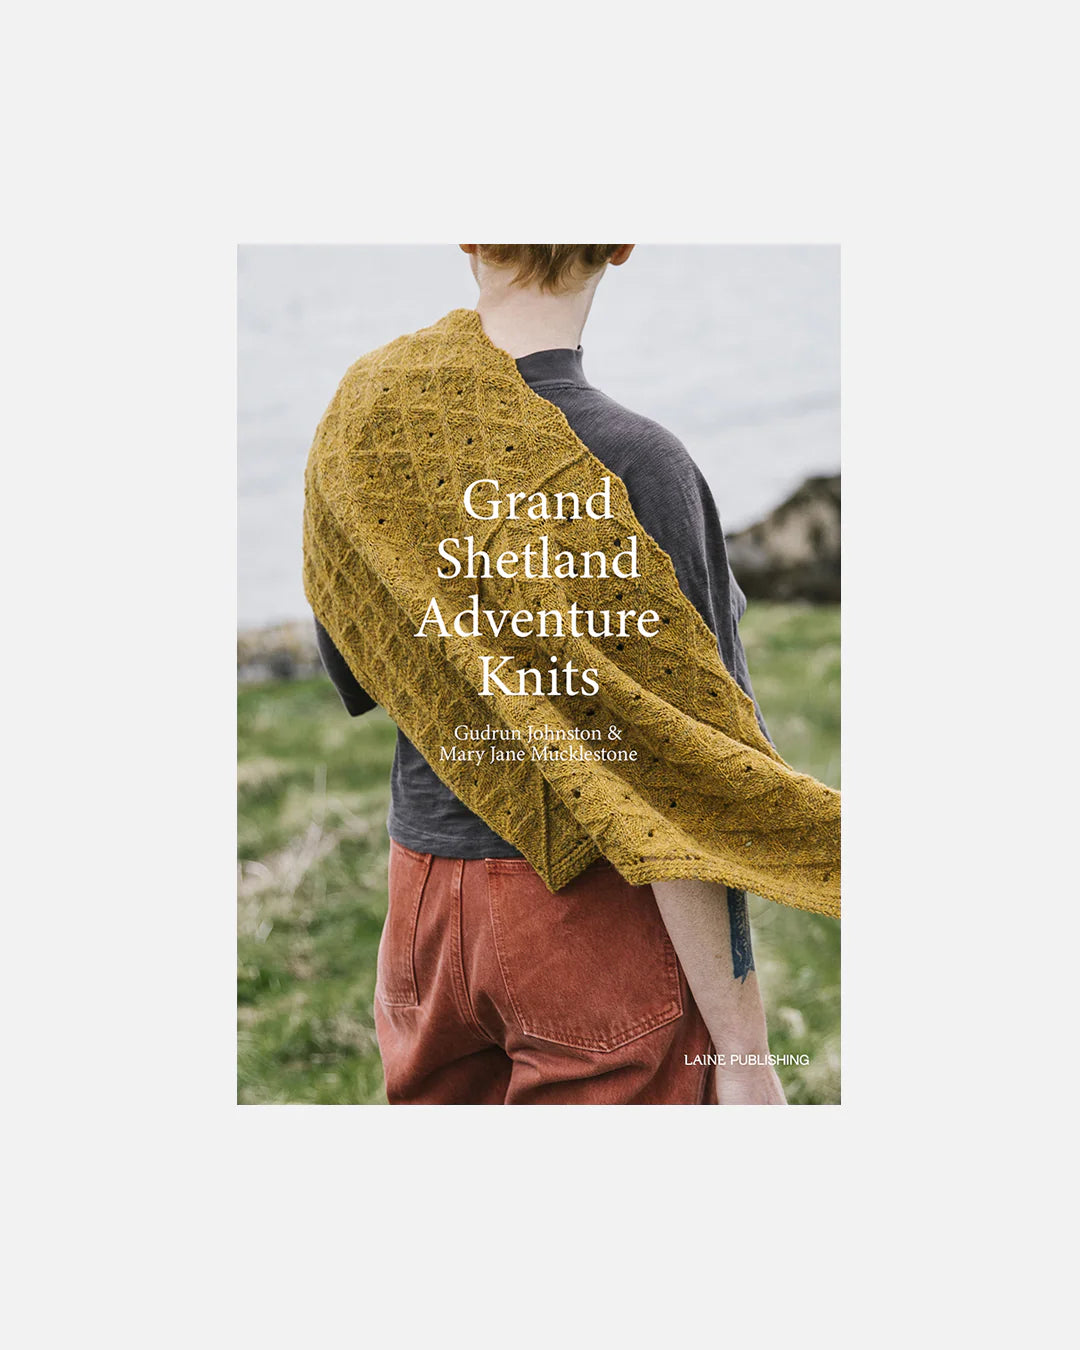 Grand Shetland Adventure Knits - Mary Jane Mucklestone and Gudrun Johnston